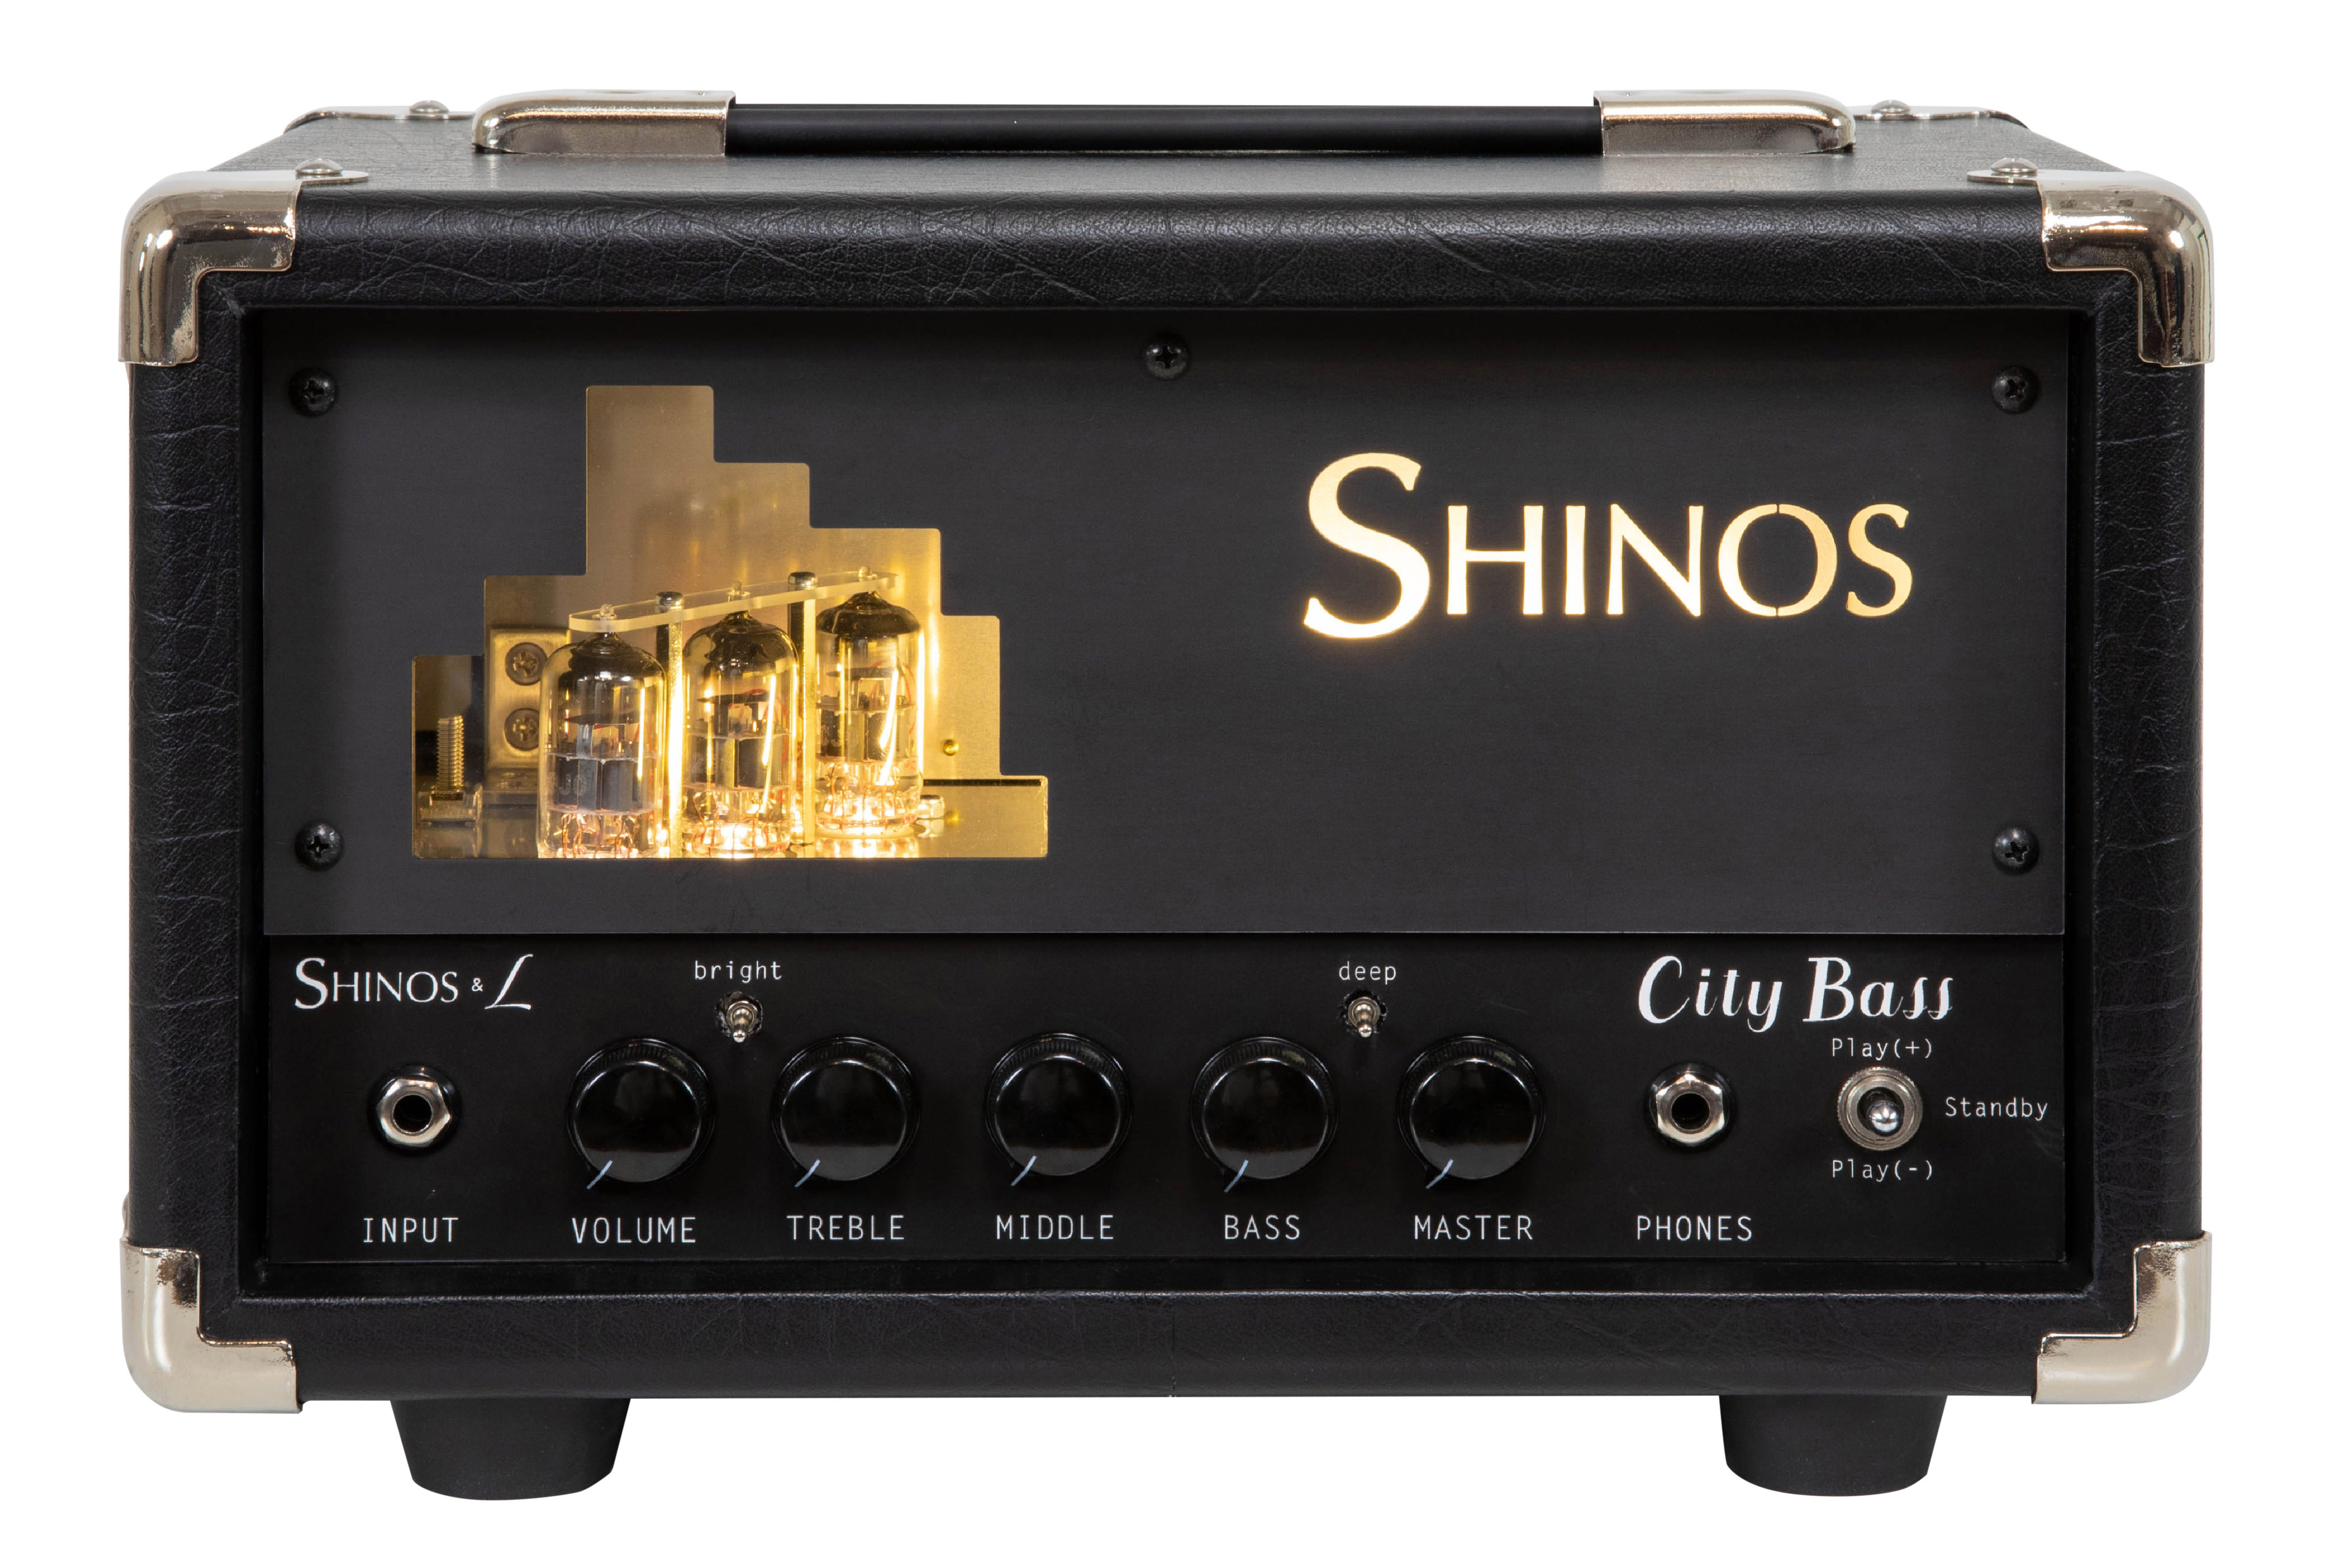 SHINOSL】6.5キロの小型軽量ベースアンプ「City Bass」発表。真空管の灯りを生かした高級感のあるデザインも好評。｜有限会社SHINOS  AMPLIFIER COMPANYのプレスリリース